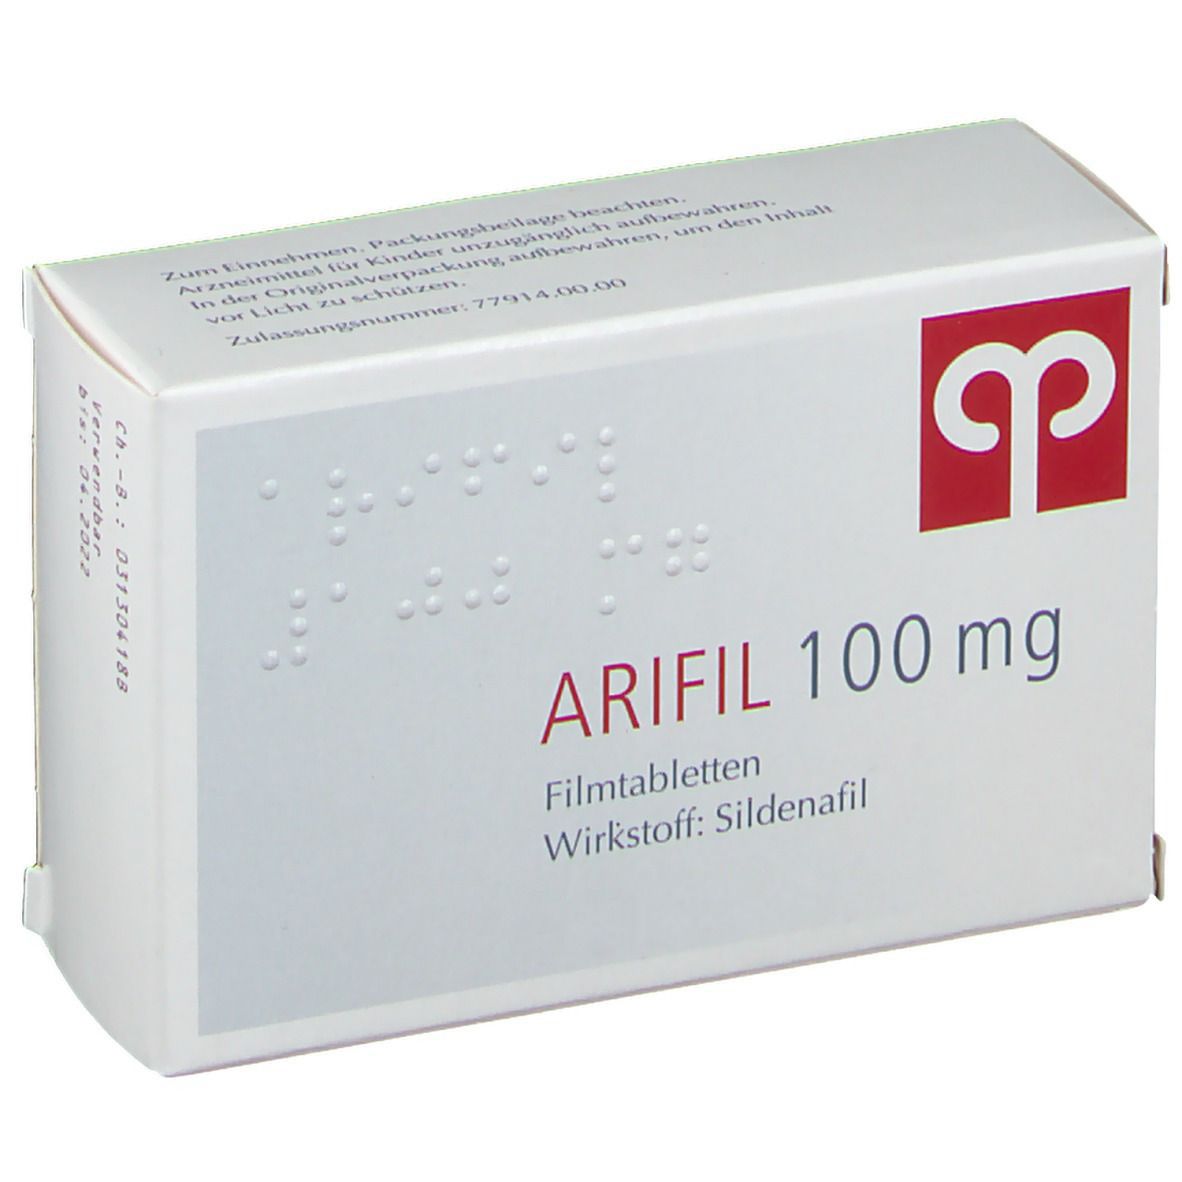 ARIFIL 100 mg